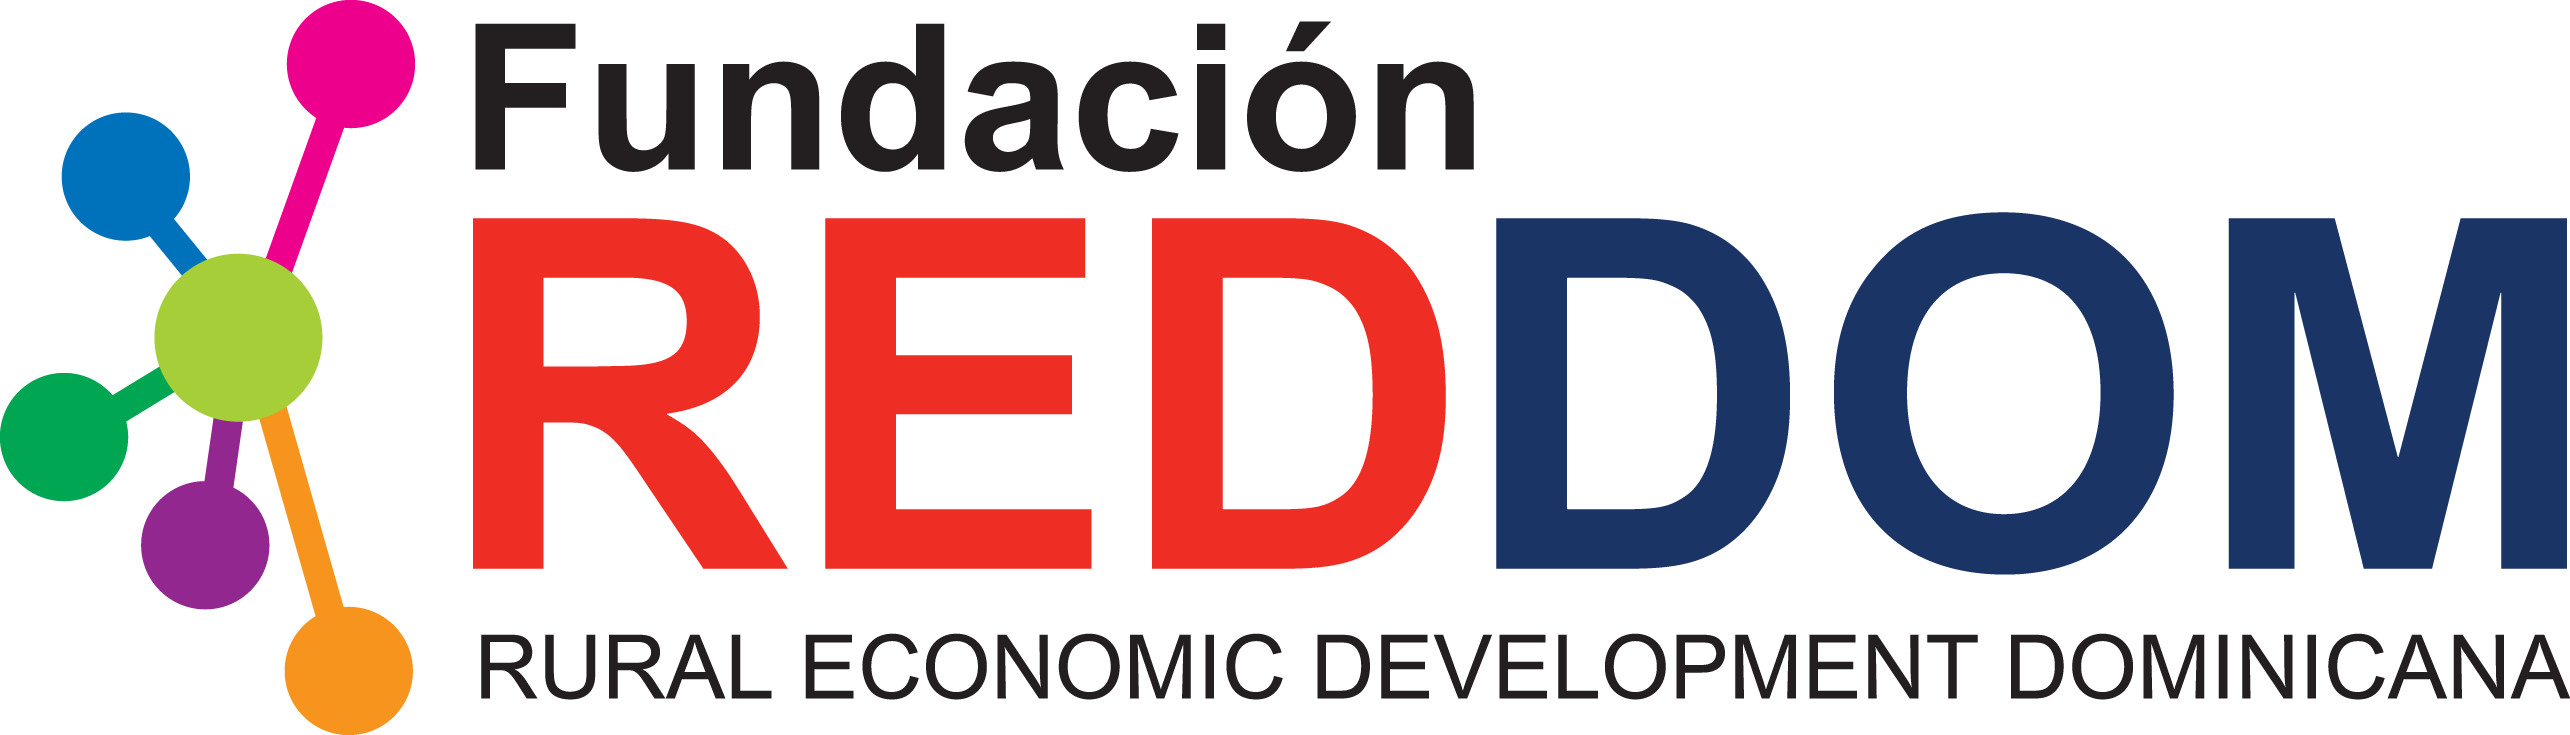 Rural Economic Development Dominicana